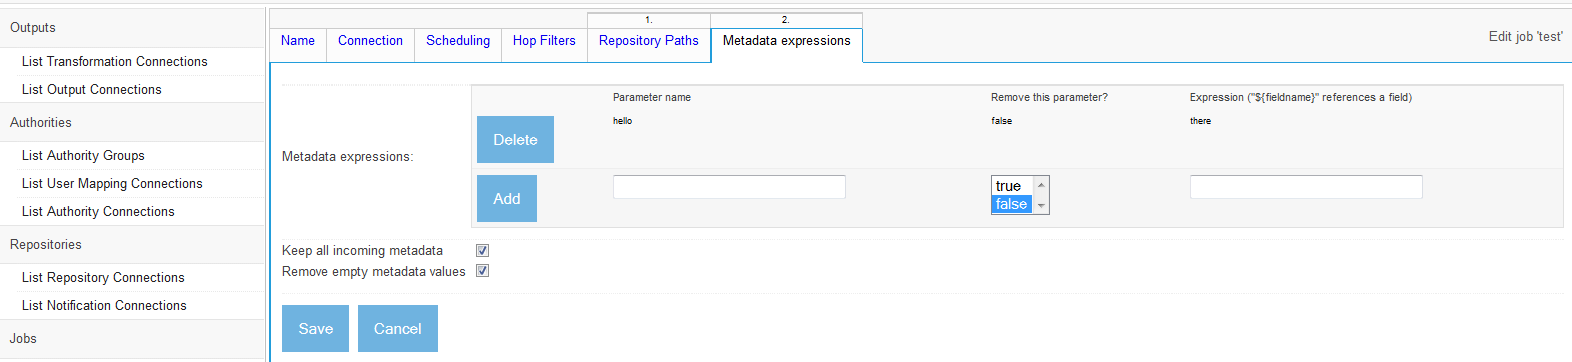 Metadata Adjuster specification, Metadata Expressions tab